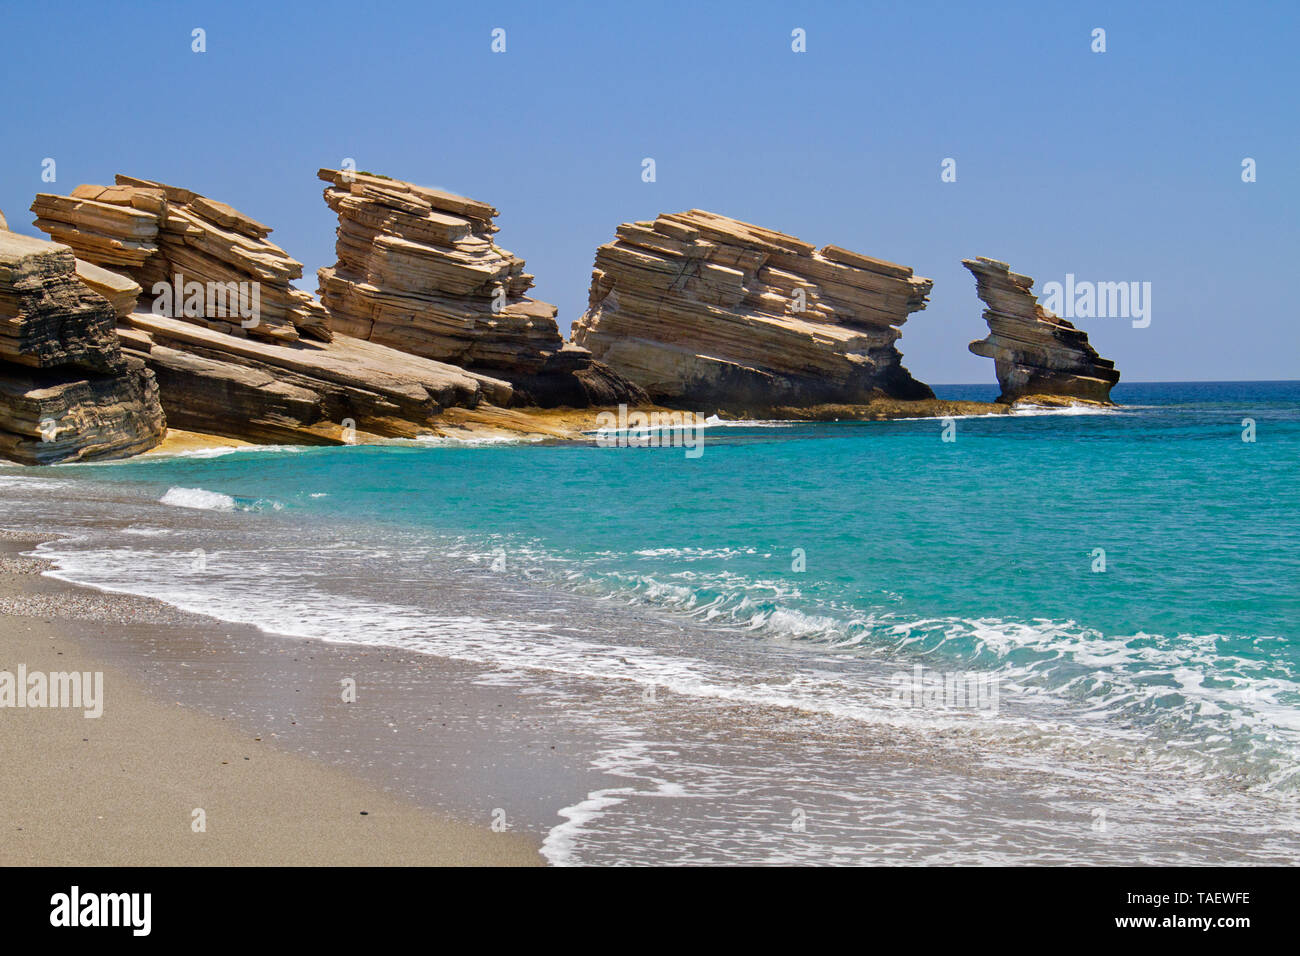 Triopetra, cliffs of platy sandstone on Crete in a turquoise sea Stock Photo